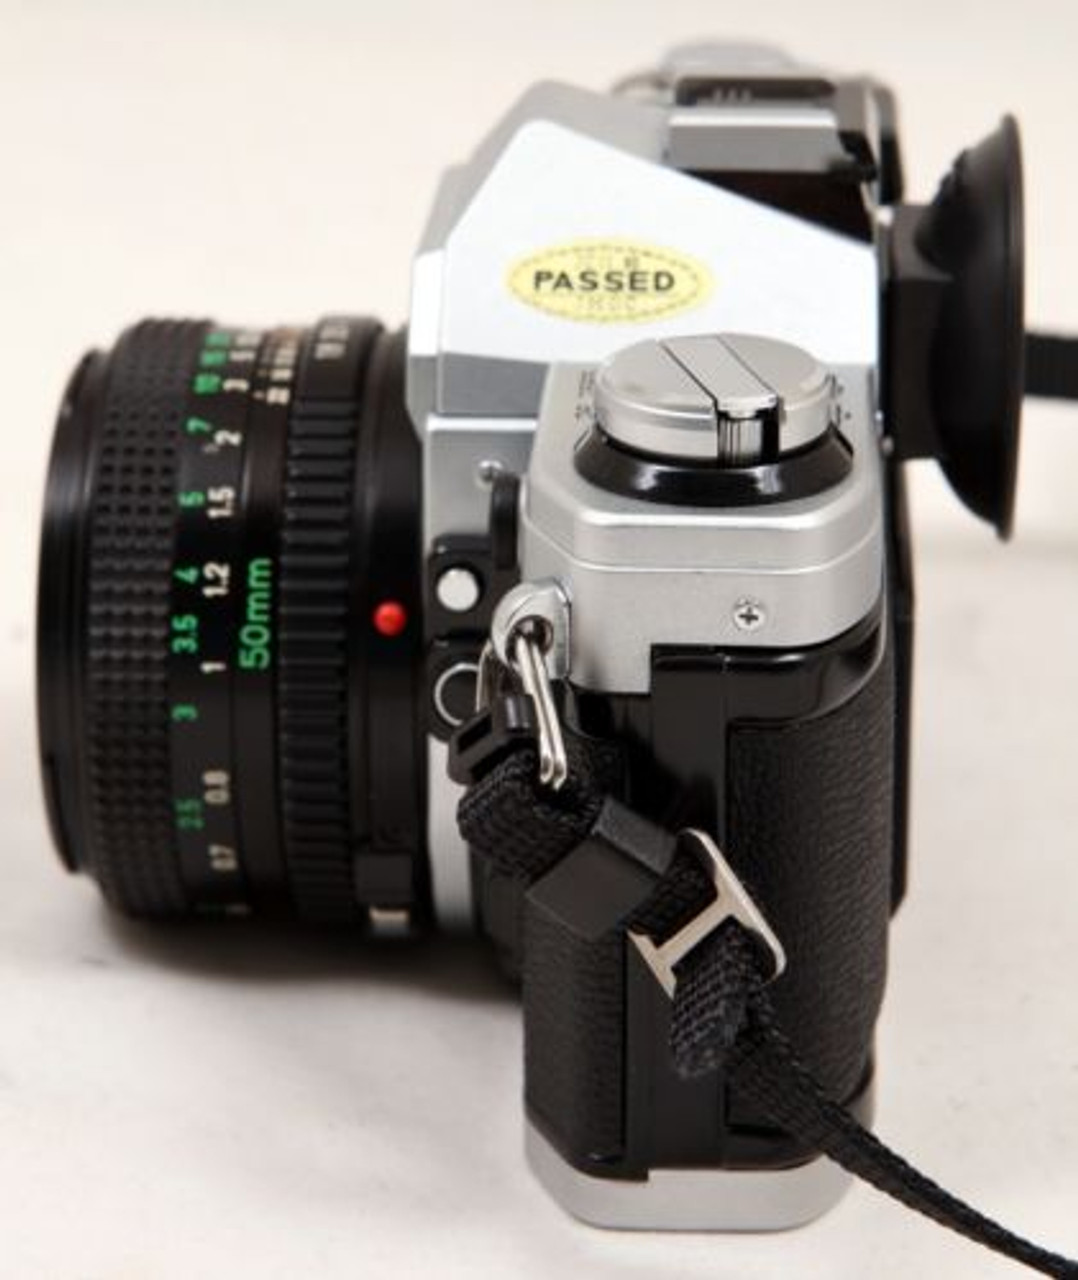 35mm slr manual camera for sale